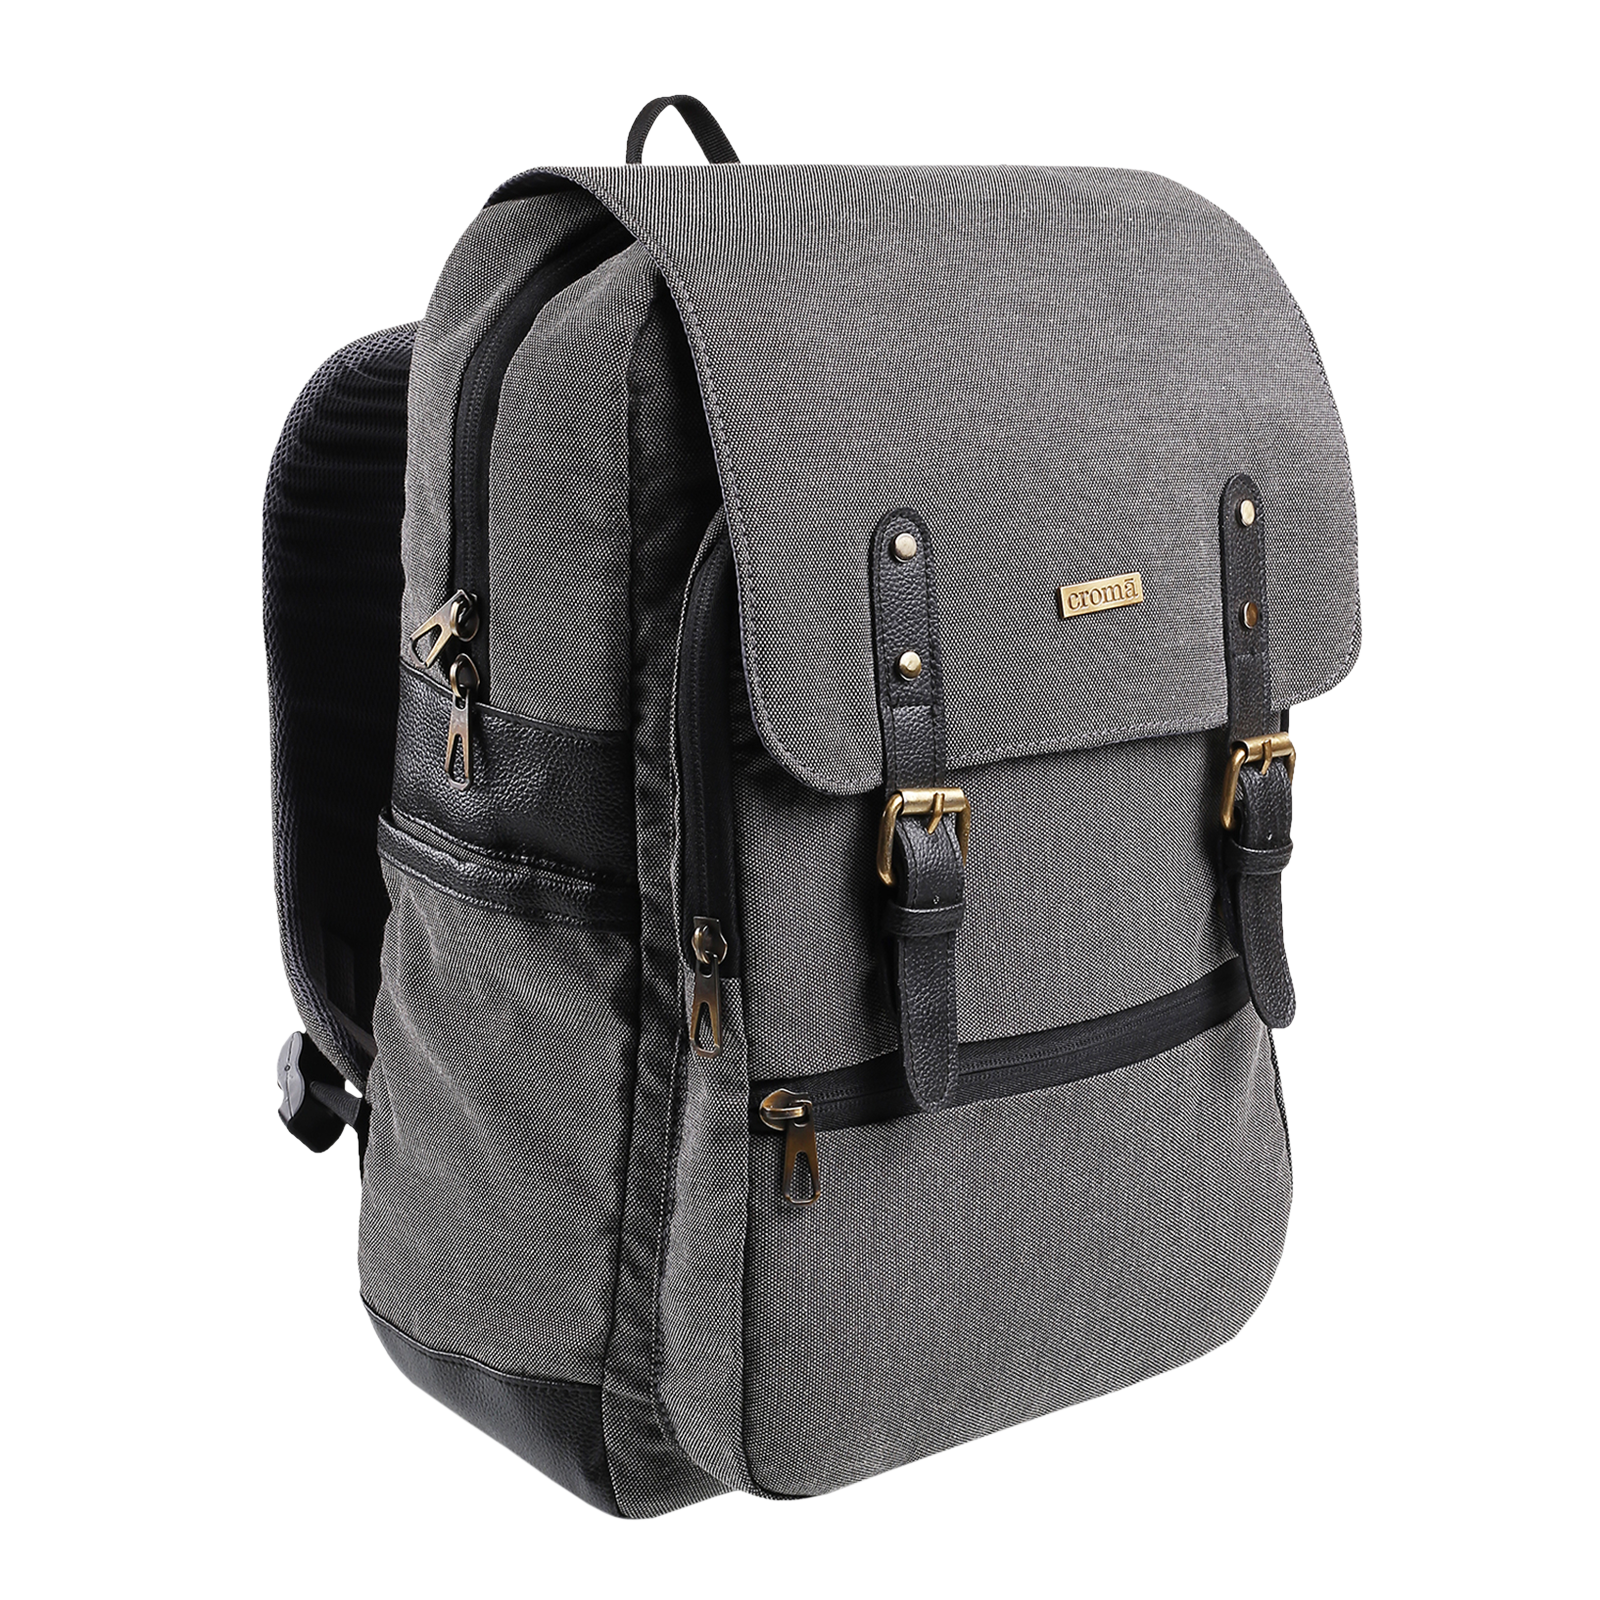 Croma Messenger Bag Crpcb6105ssd01 14 L Laptop Backpack Grey - Price in  India | Flipkart.com